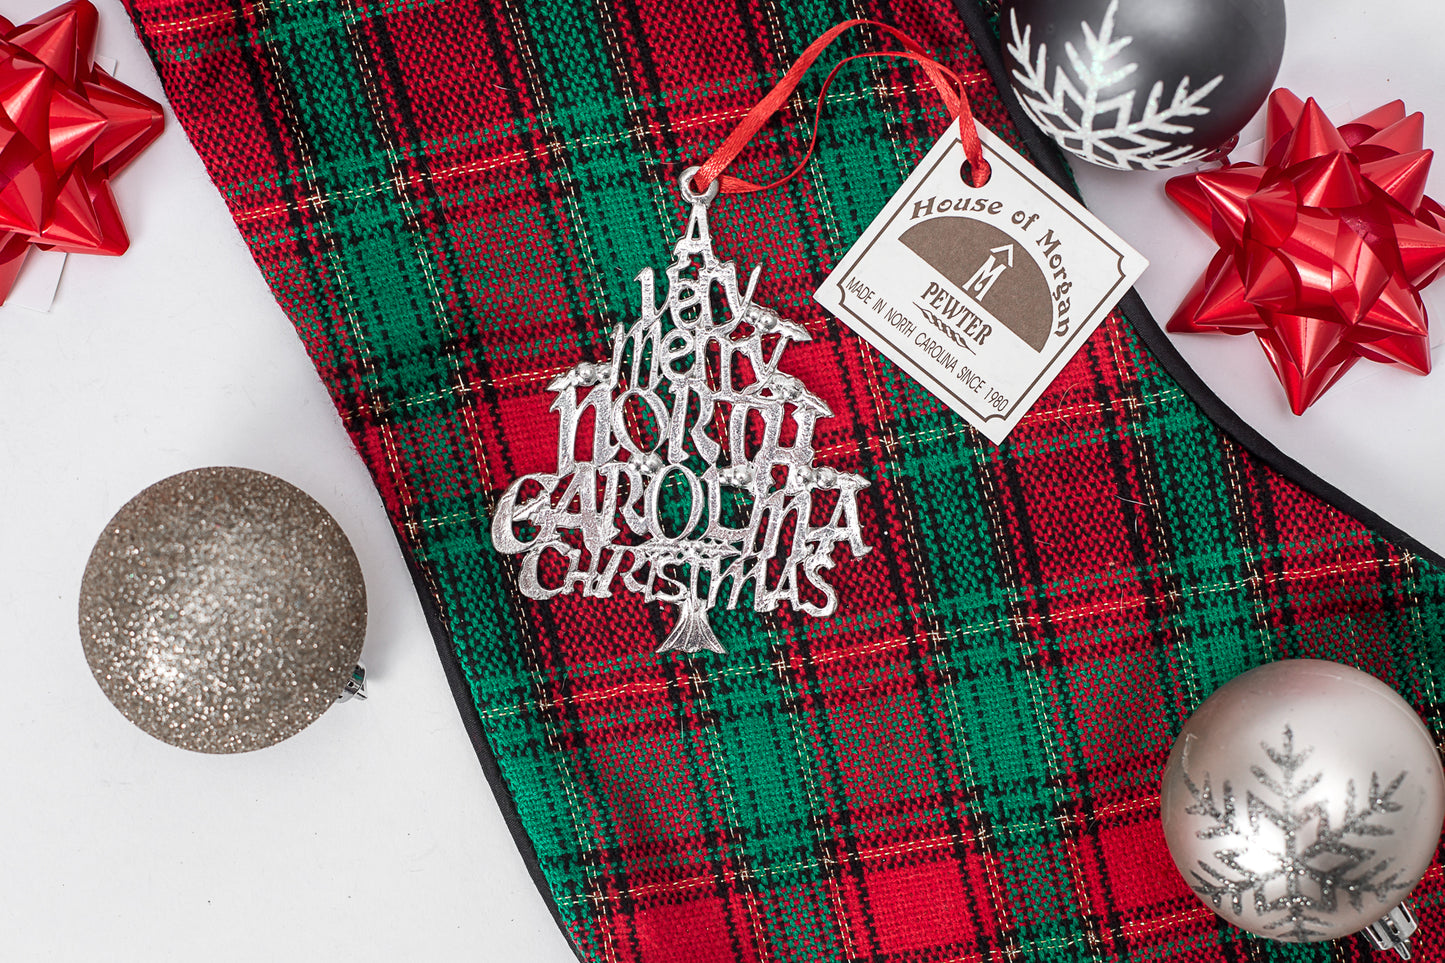 North Carolina Ornament for Christmas Tree - NC Holiday Decorations - US Travel Souvenir and Gift